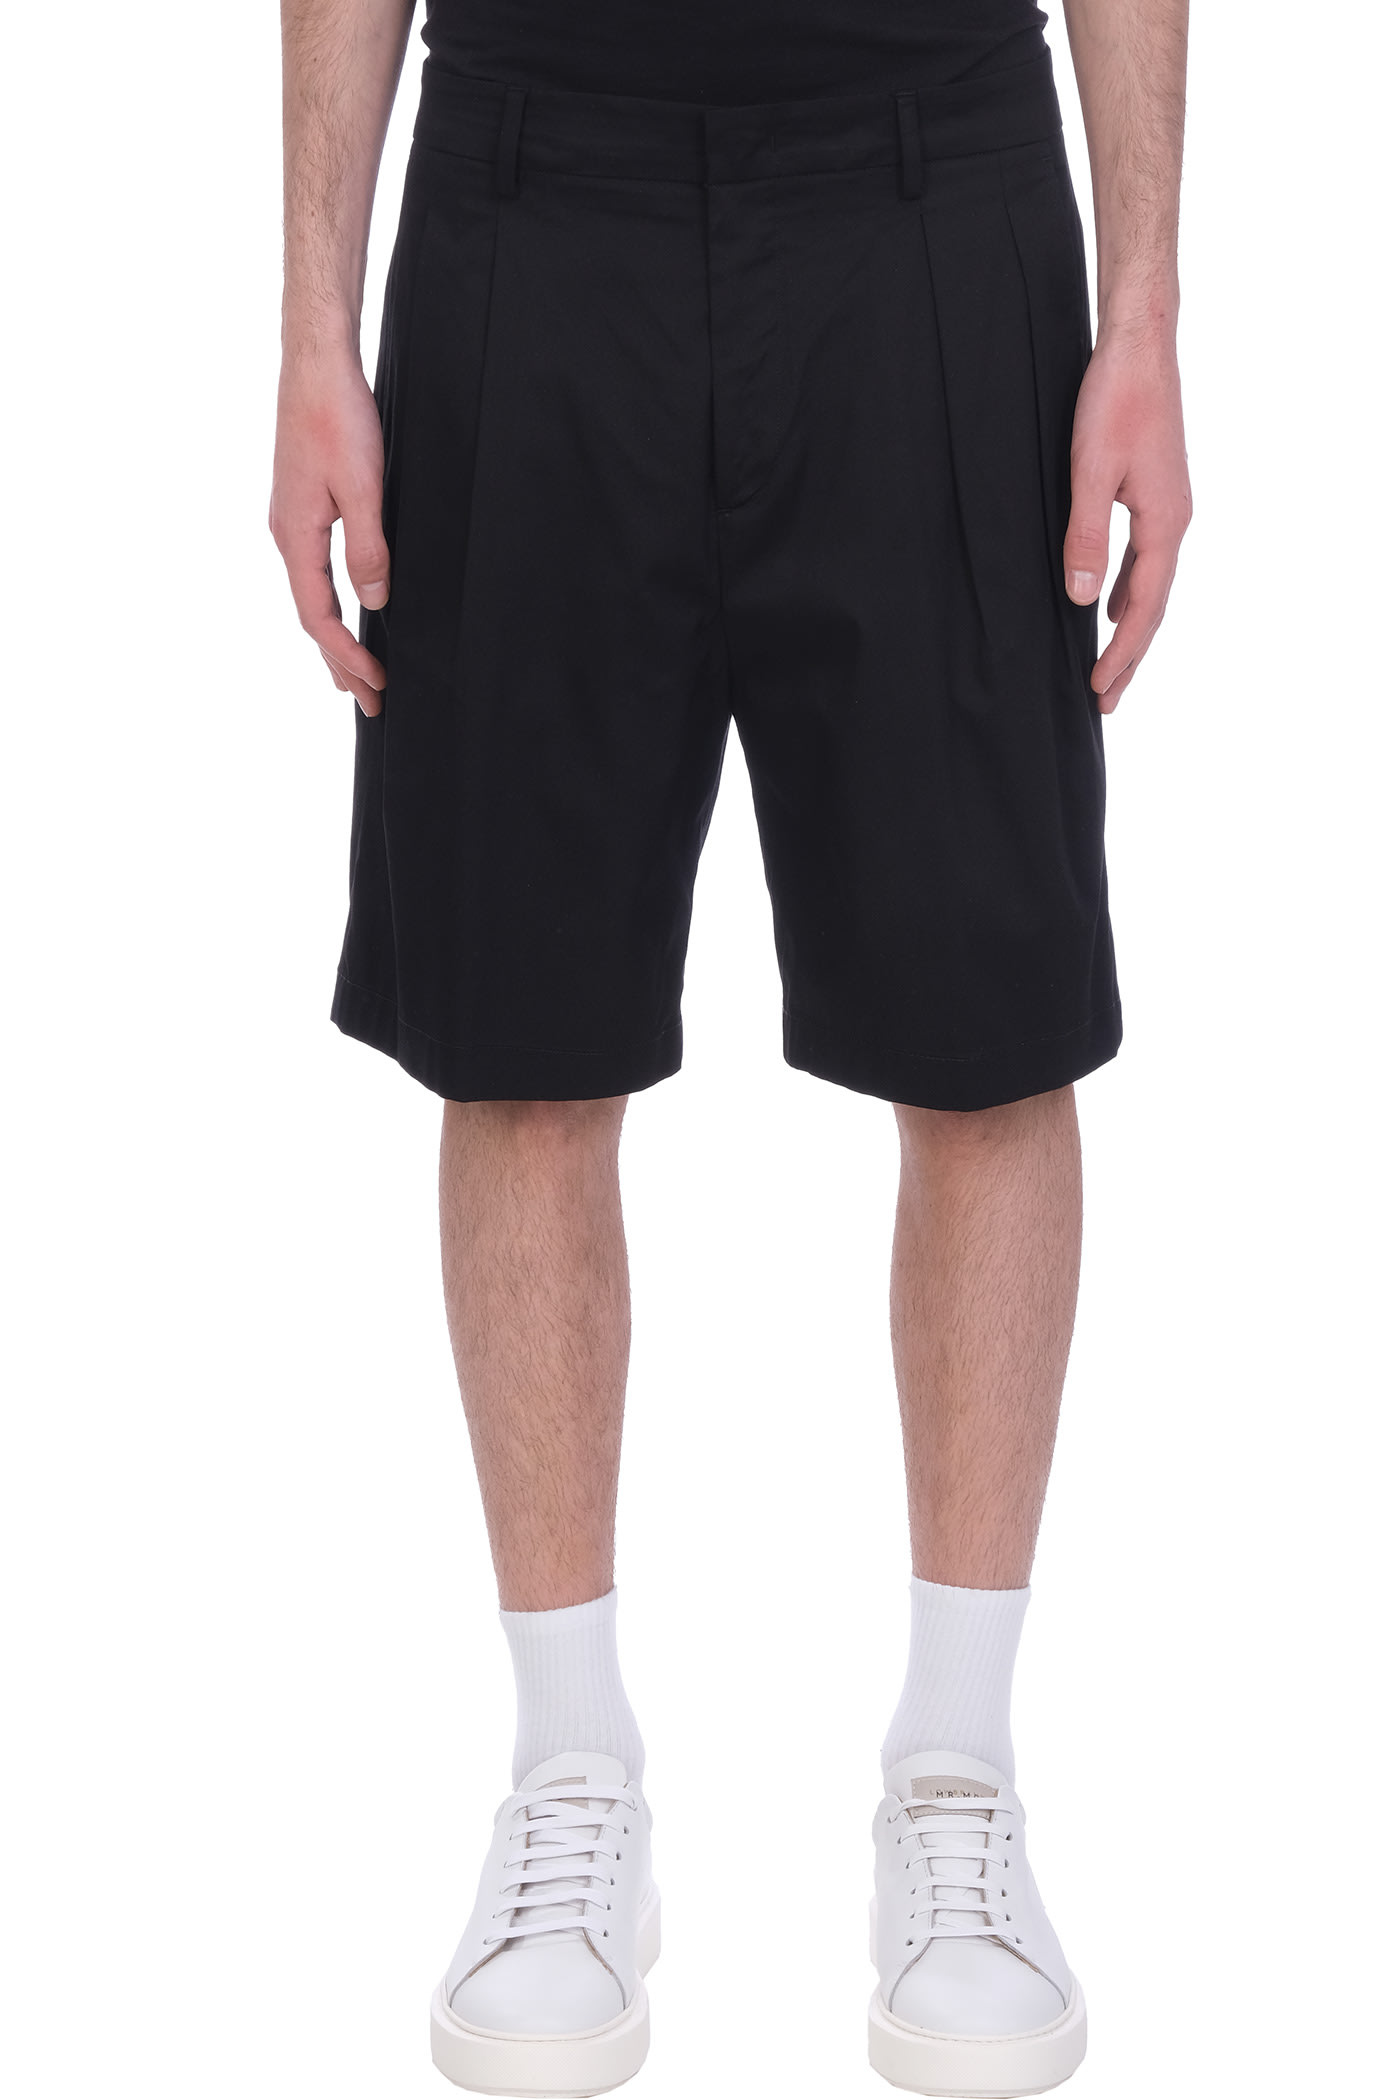 Low Brand Miami Shorts In Black Cotton